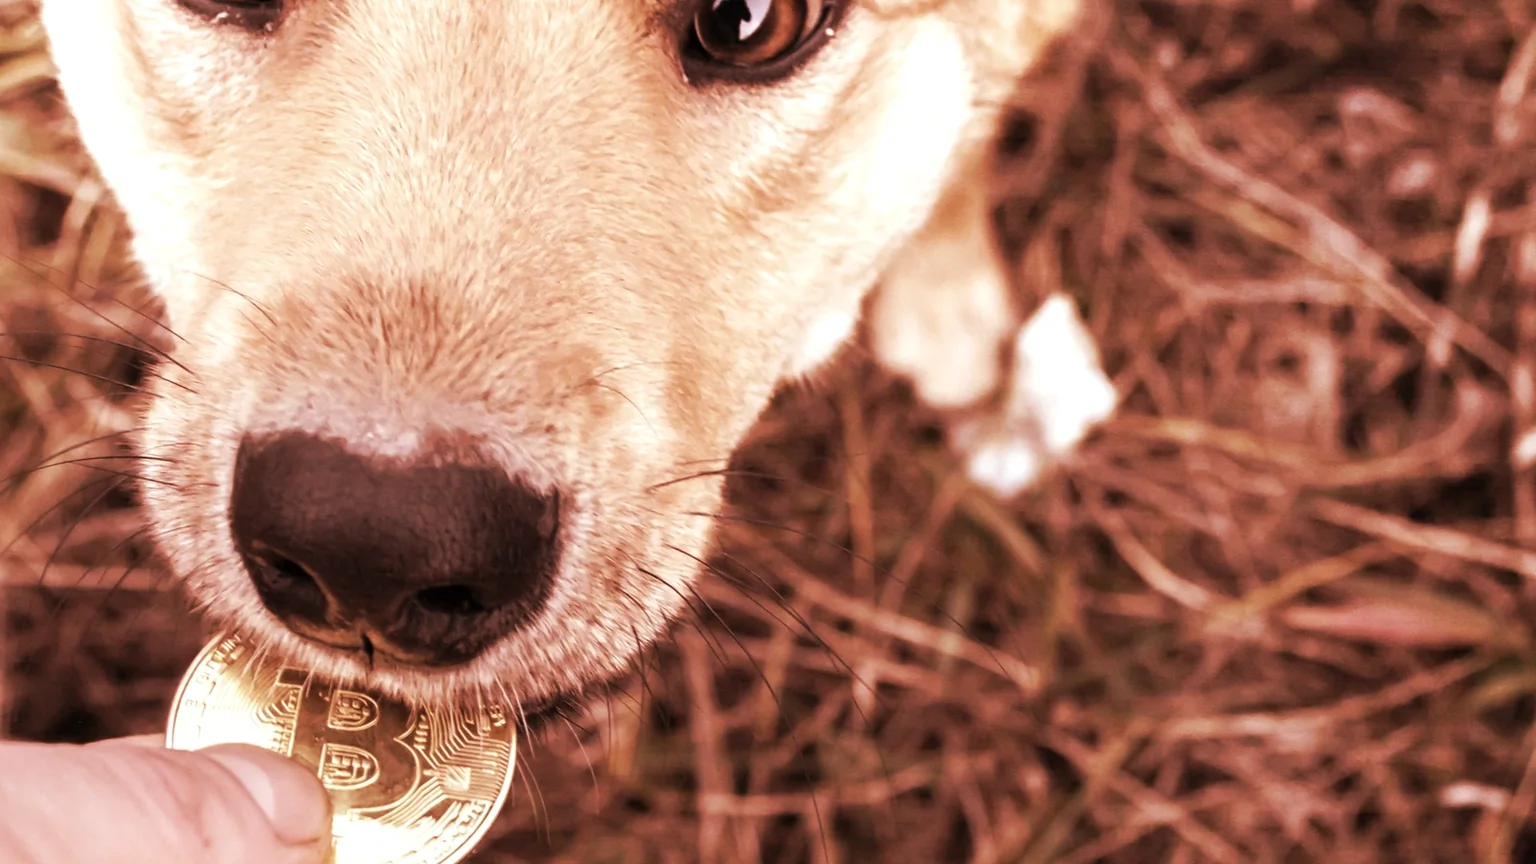 Man names dog Bitcoin. Image: Shutterstock